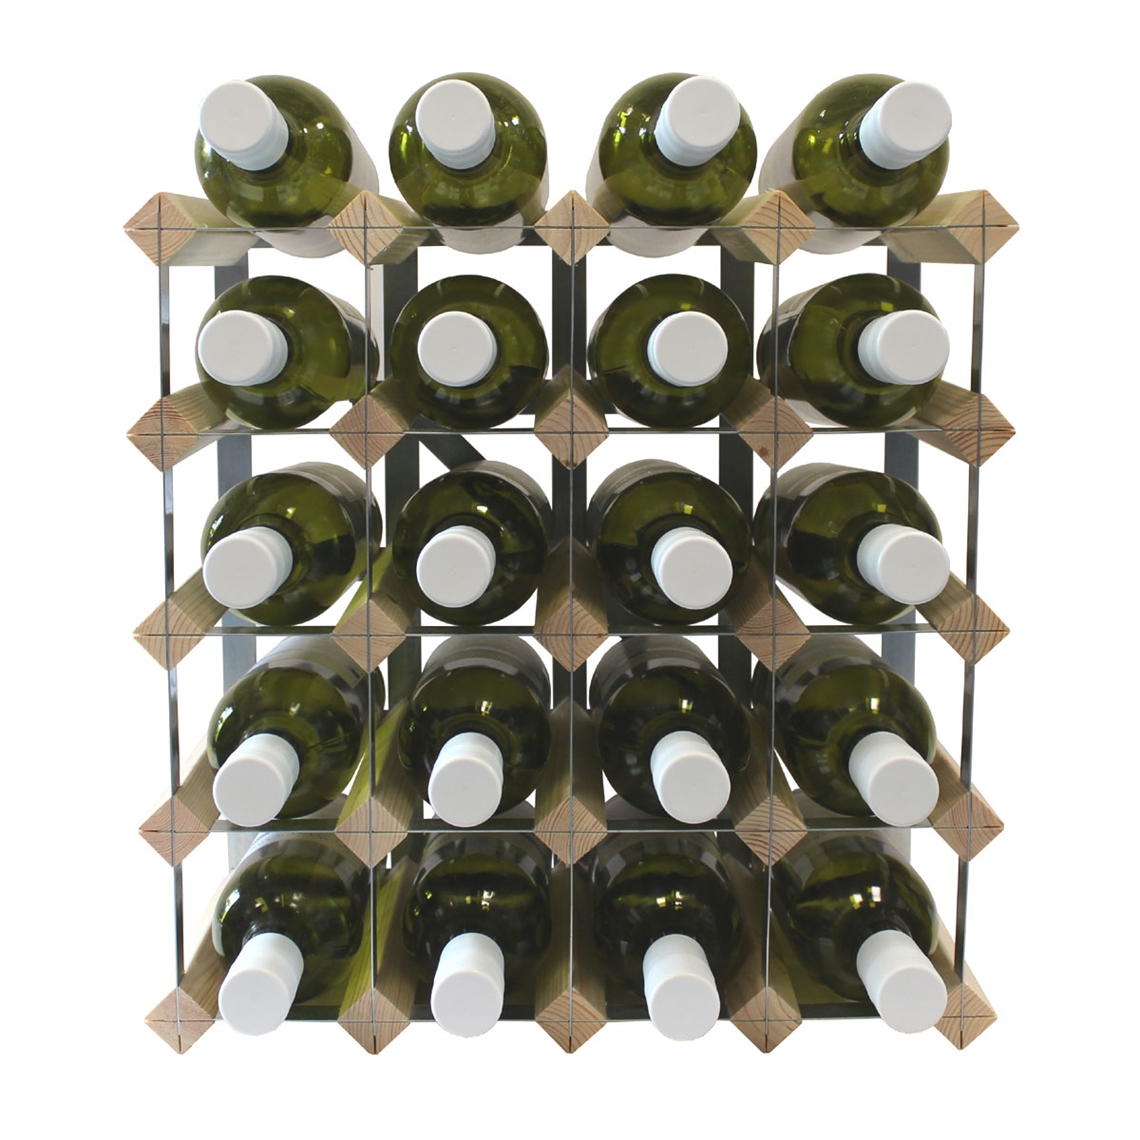 View more corner wine racks from our Assembled Wine Racks range